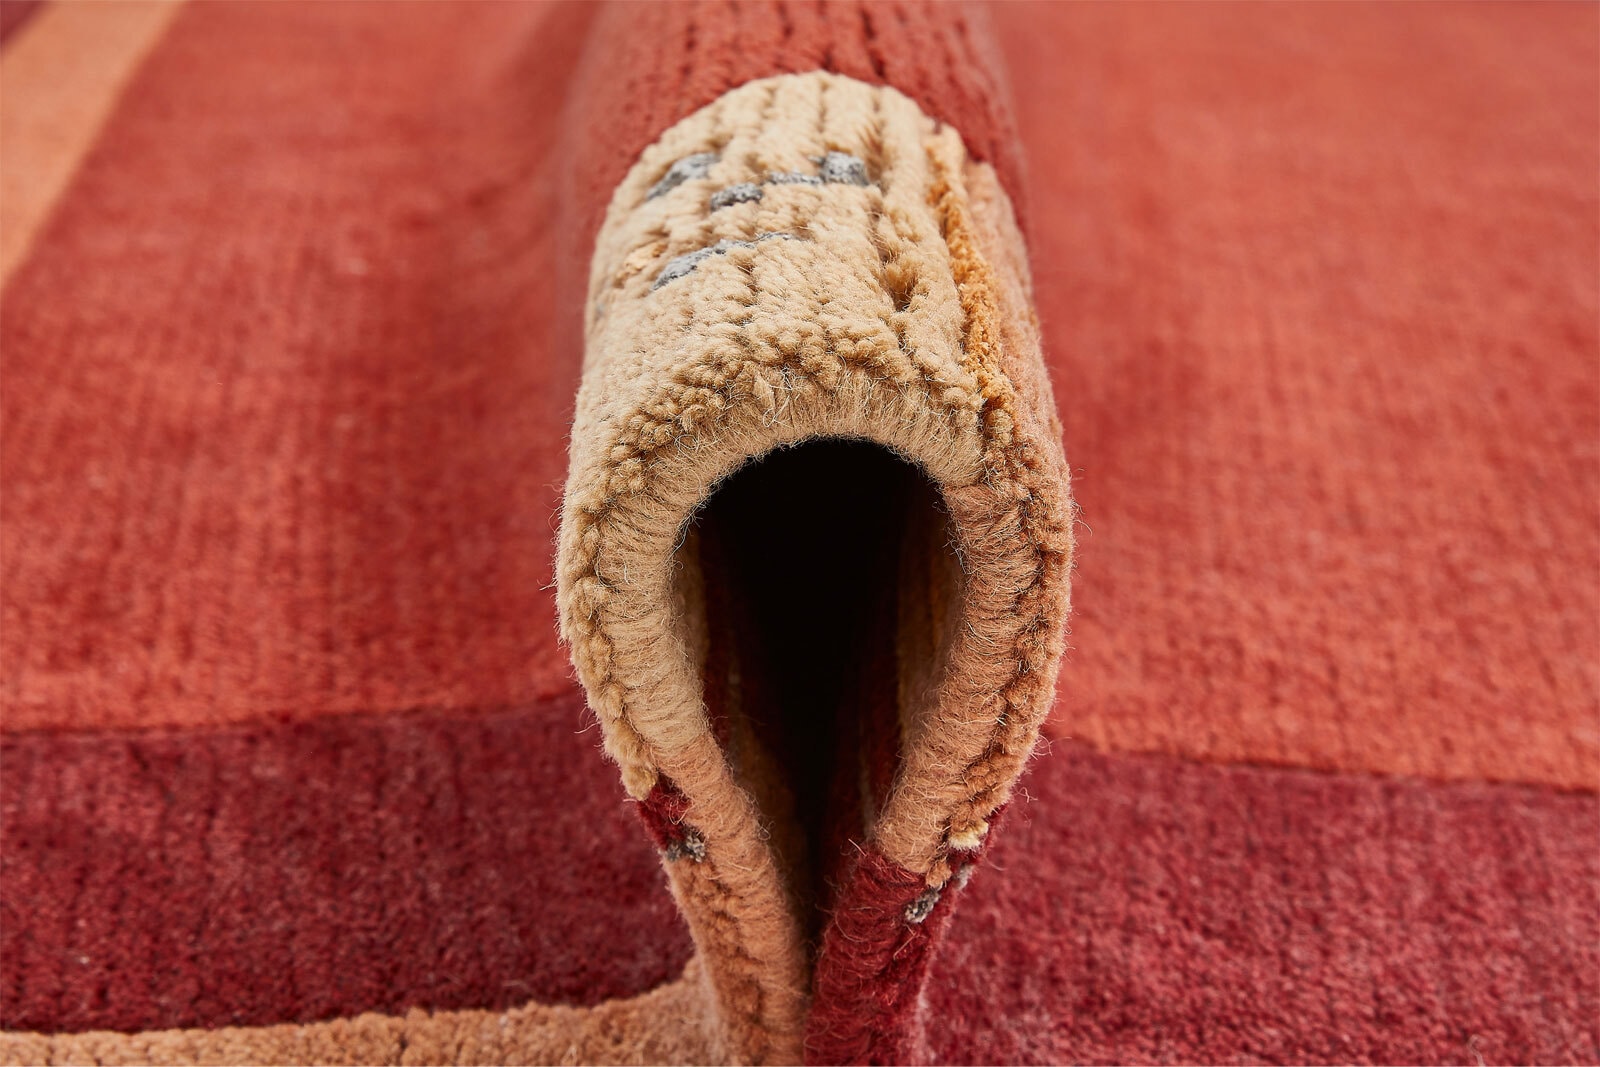 Teppich MANALI 40 x 60 cm rot